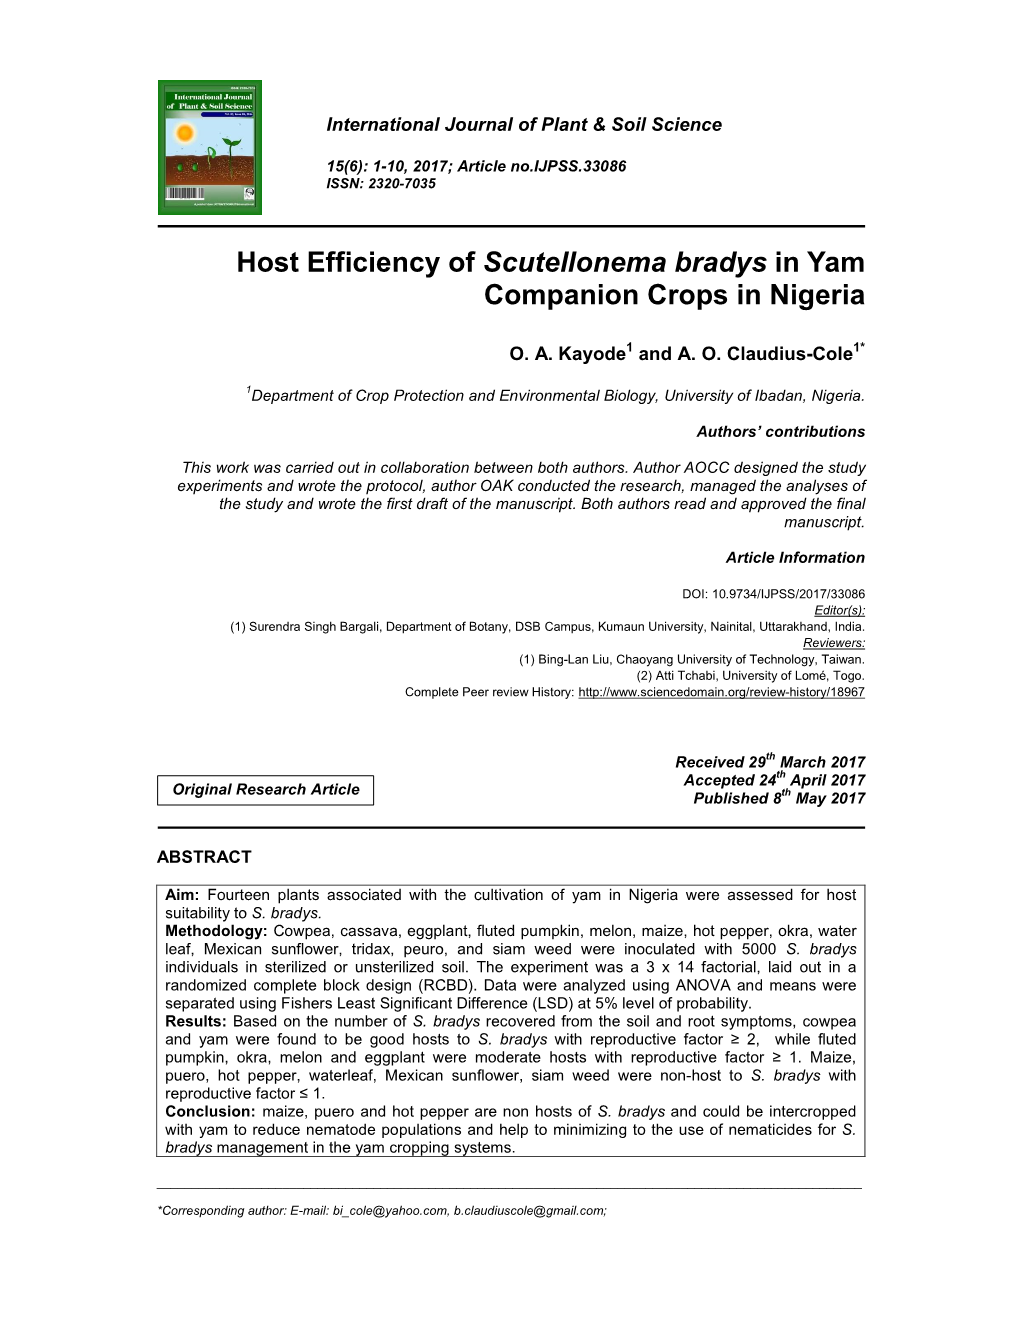 Host Efficiency of Scutellonema Bradys in Yam Companion Crops in Nigeria